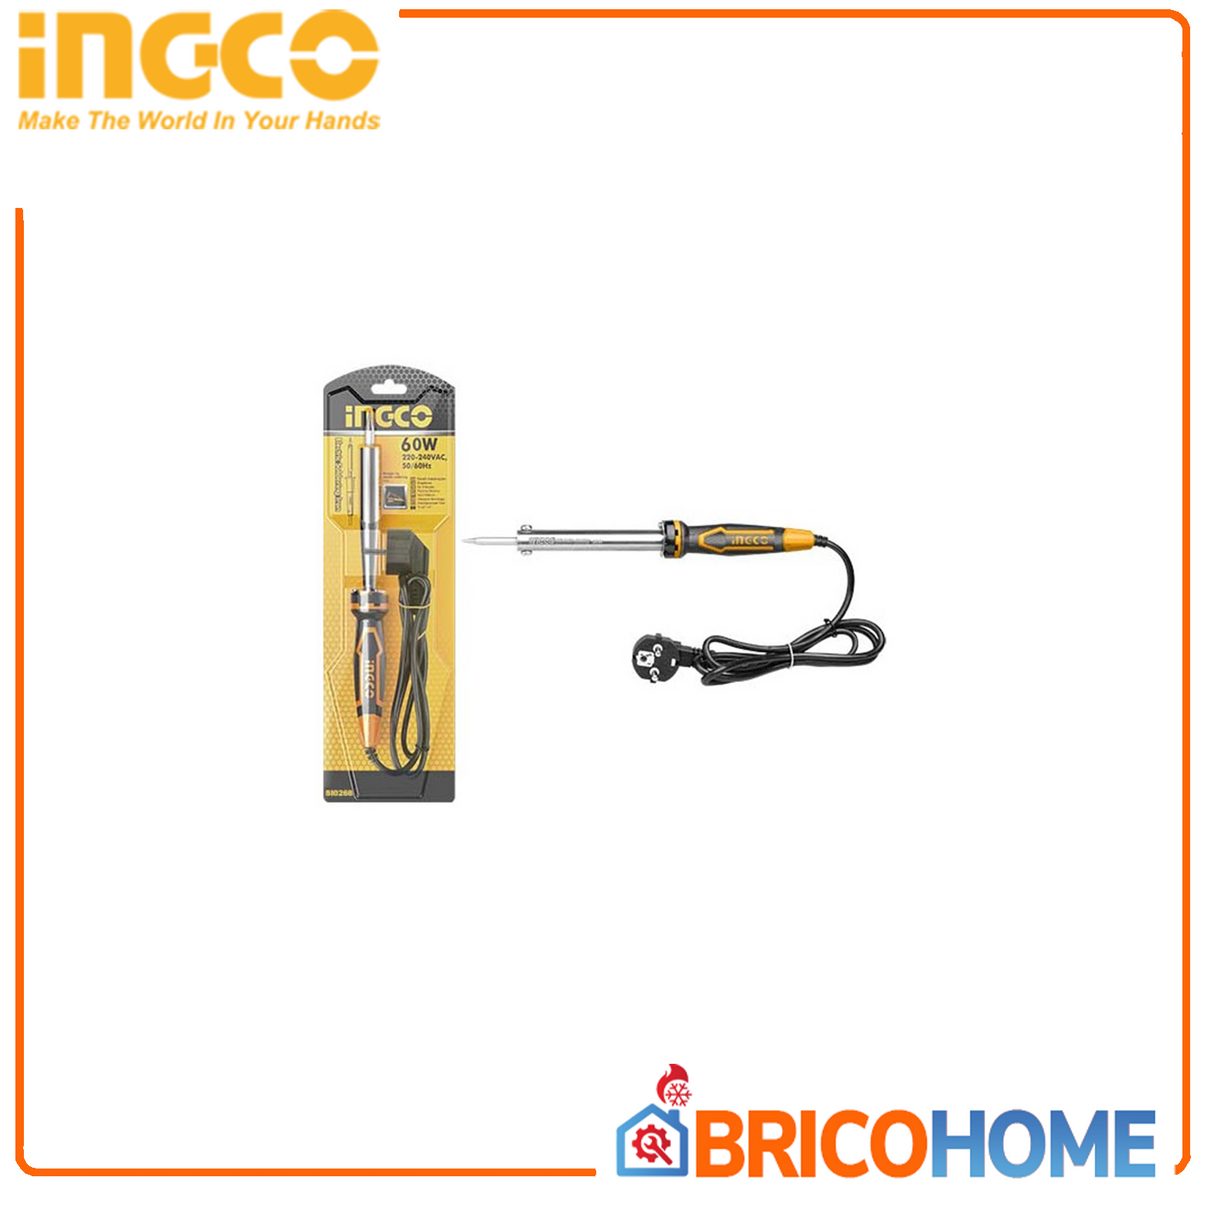 INGCO 60w electric soldering iron 